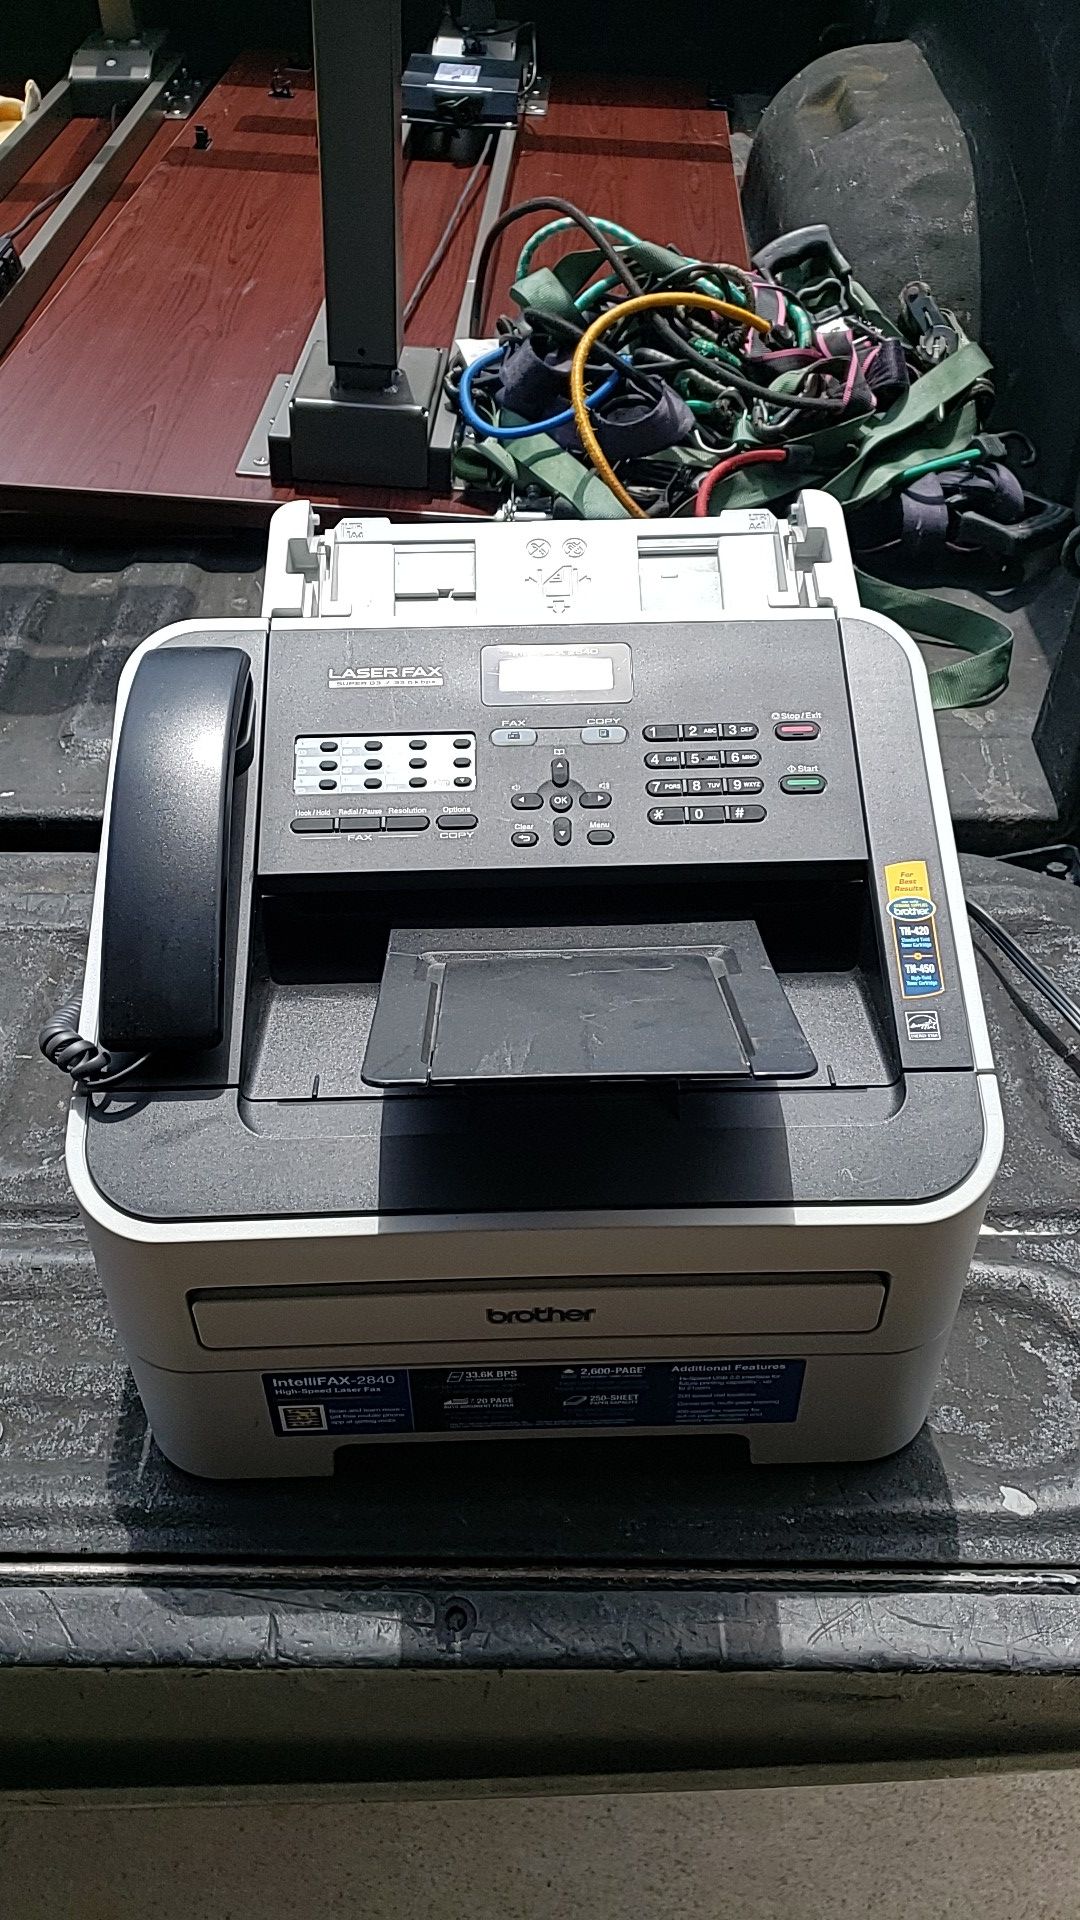 Brother Intelli-fax 2840 Laser Printer Fax Copier